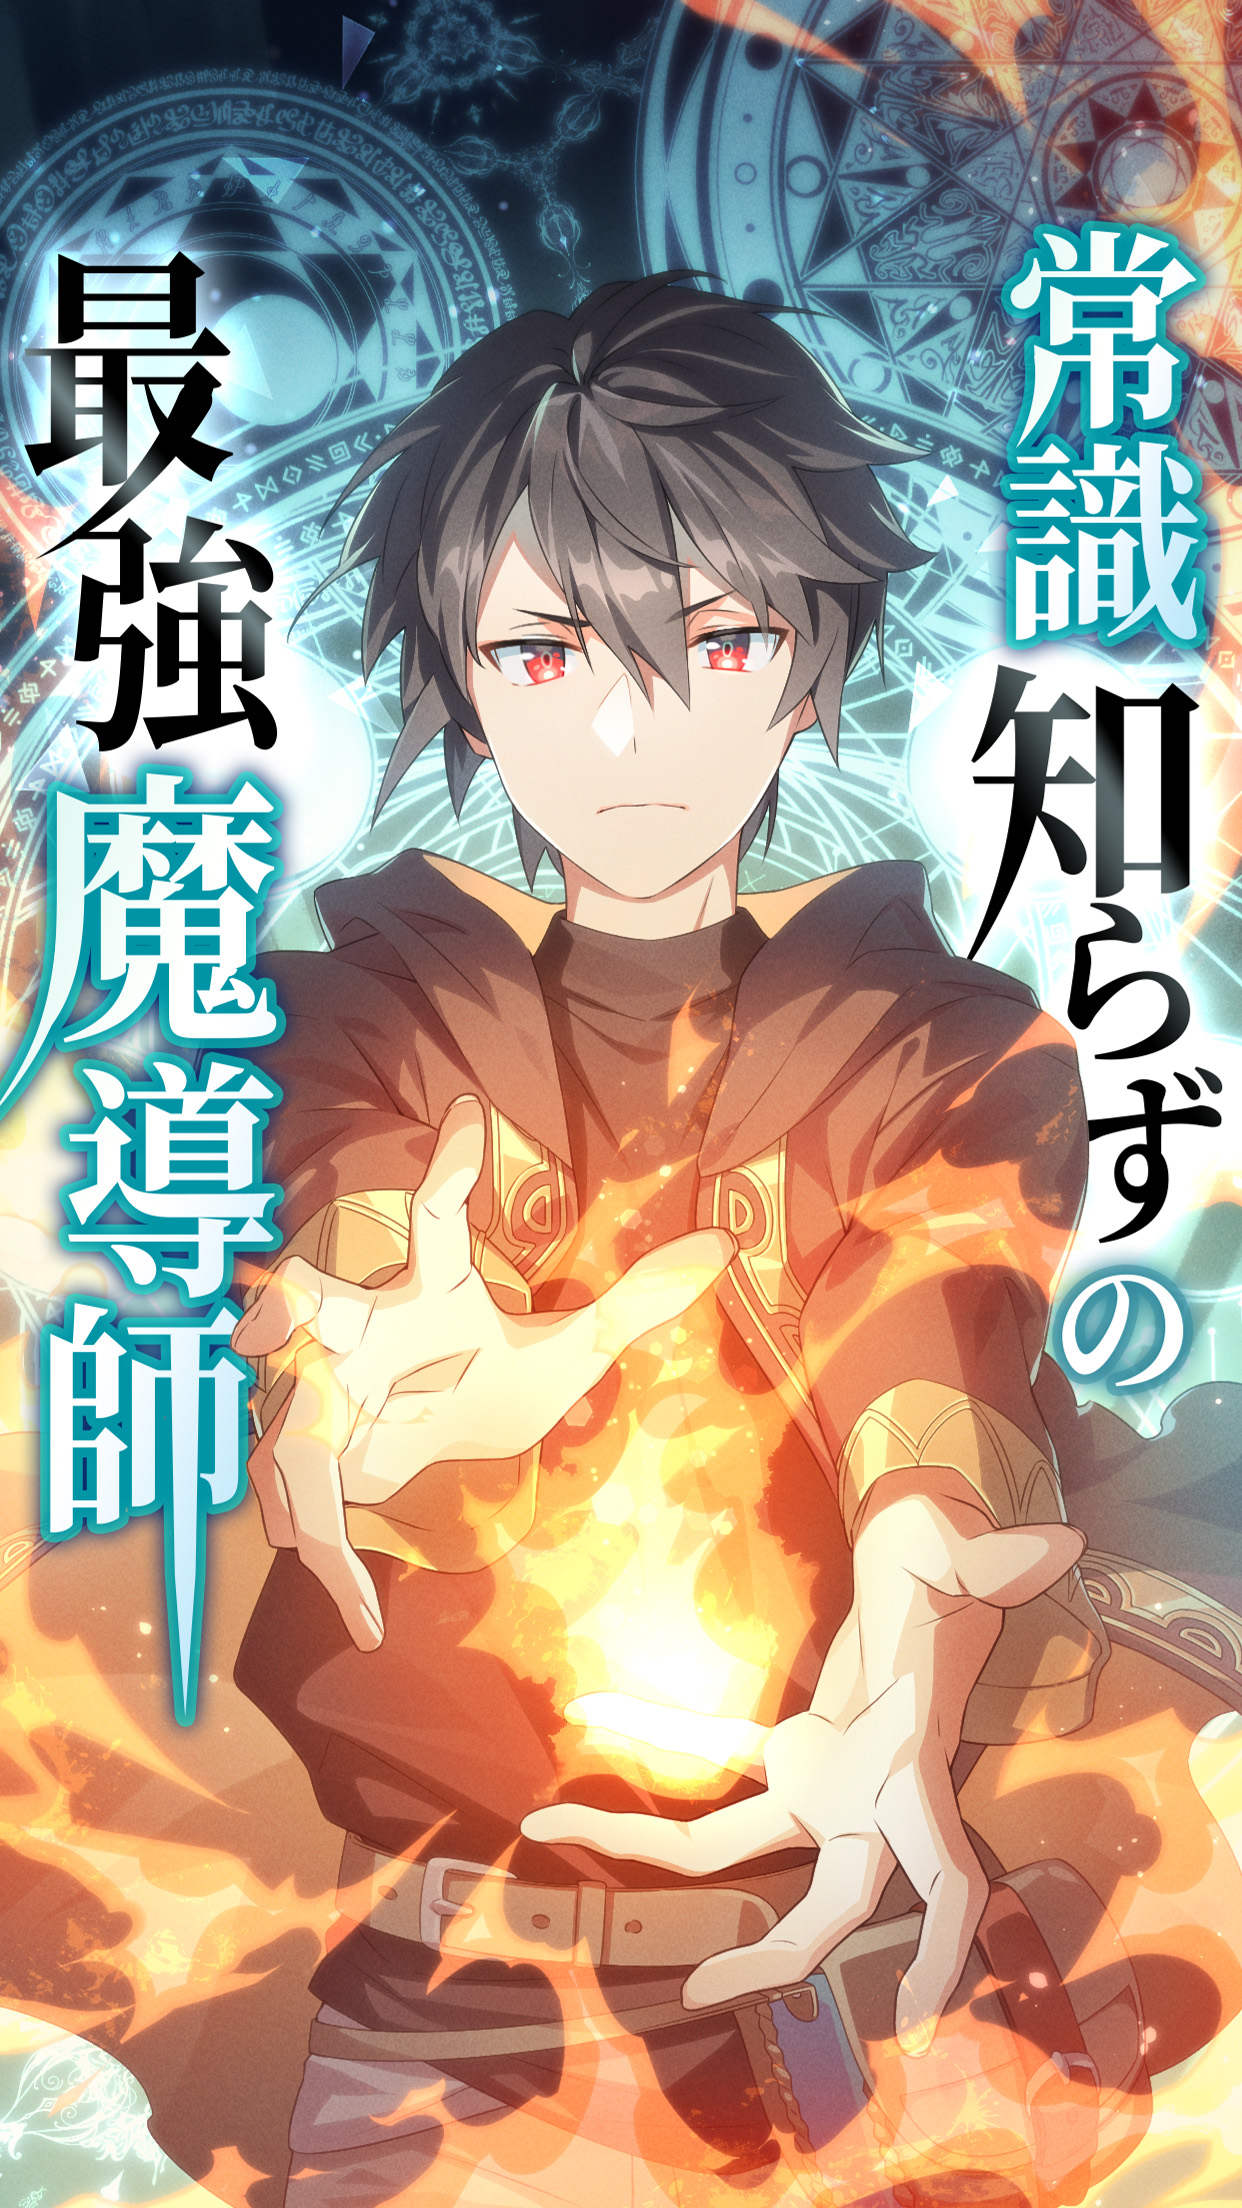 Read Joushiki Shirazu no Saikyou Madoushi - manga Online in English